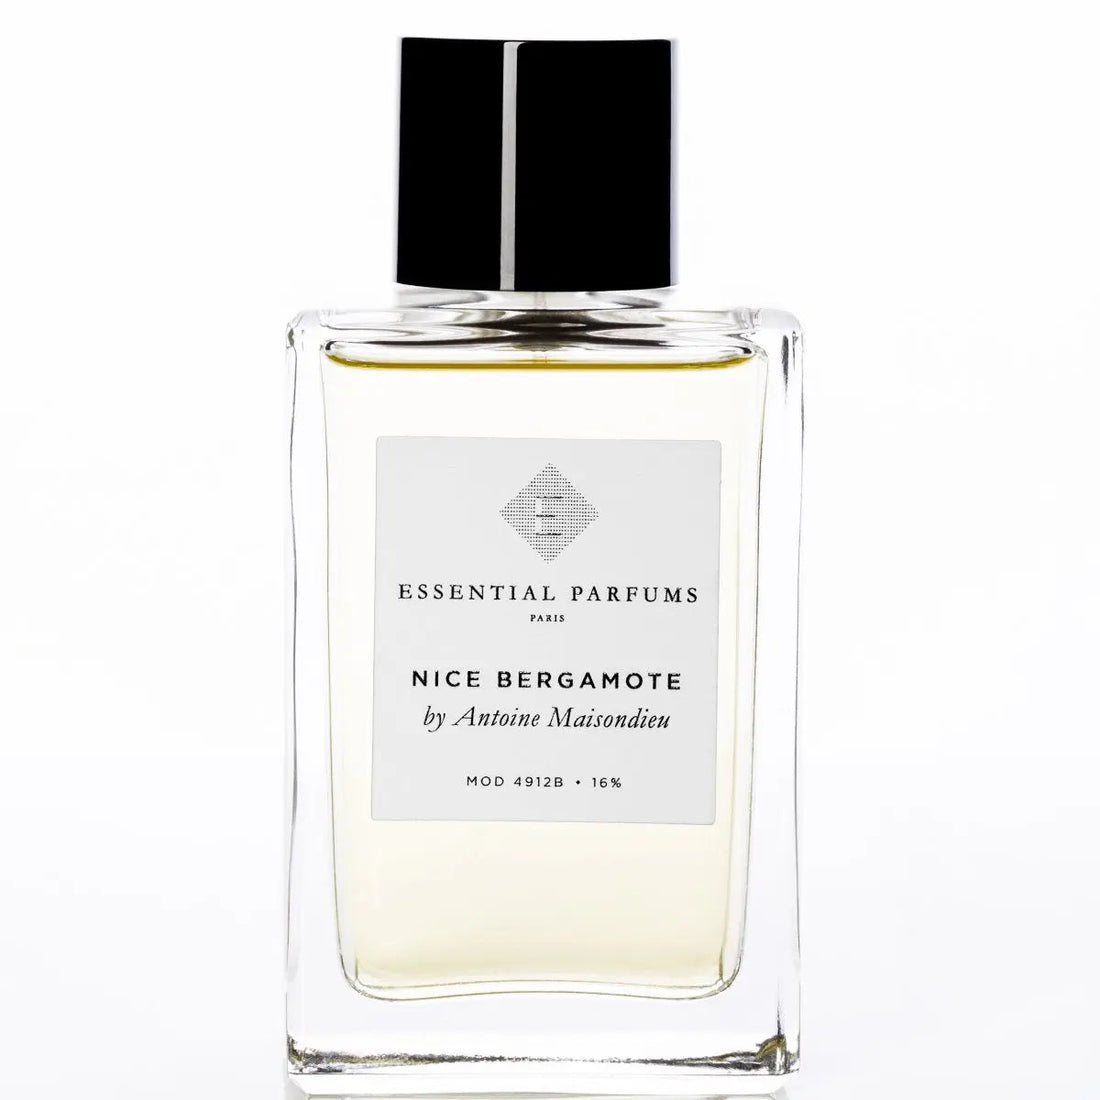 Essential parfums Nice Bergamote eau de parfum - 100 ml